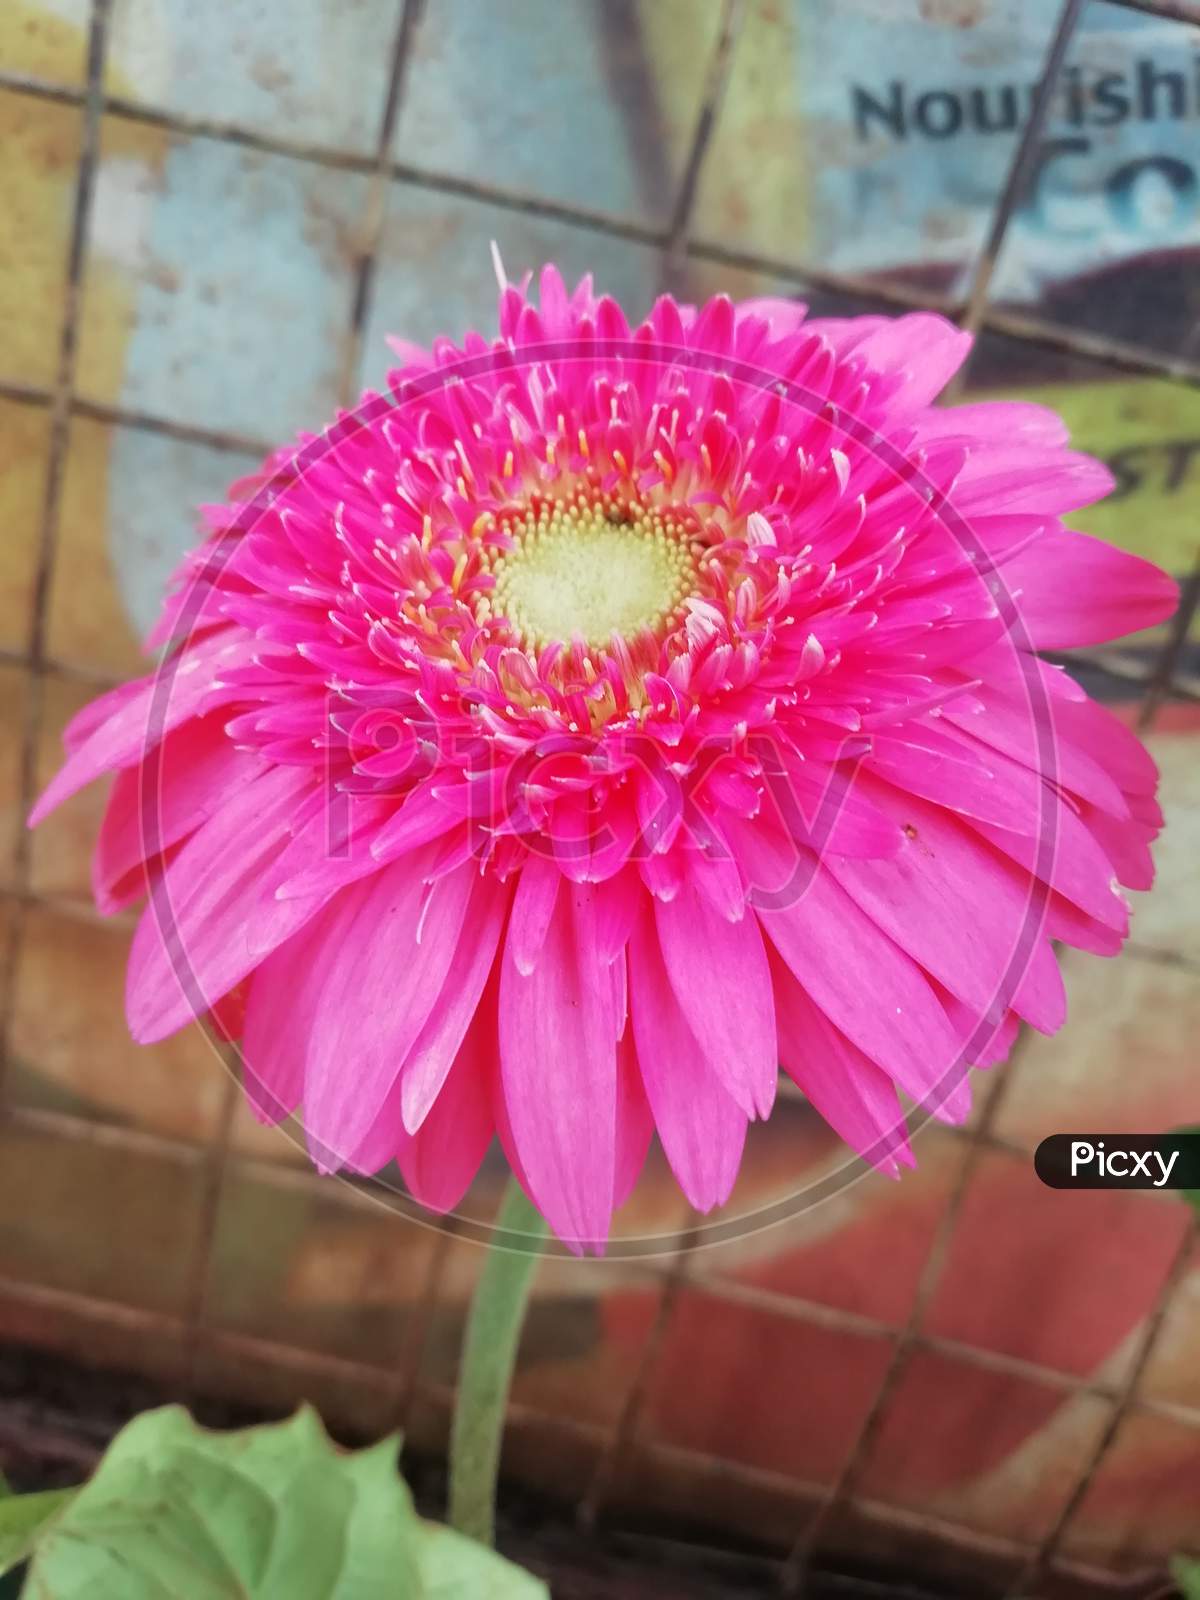 Pink flower Close up view